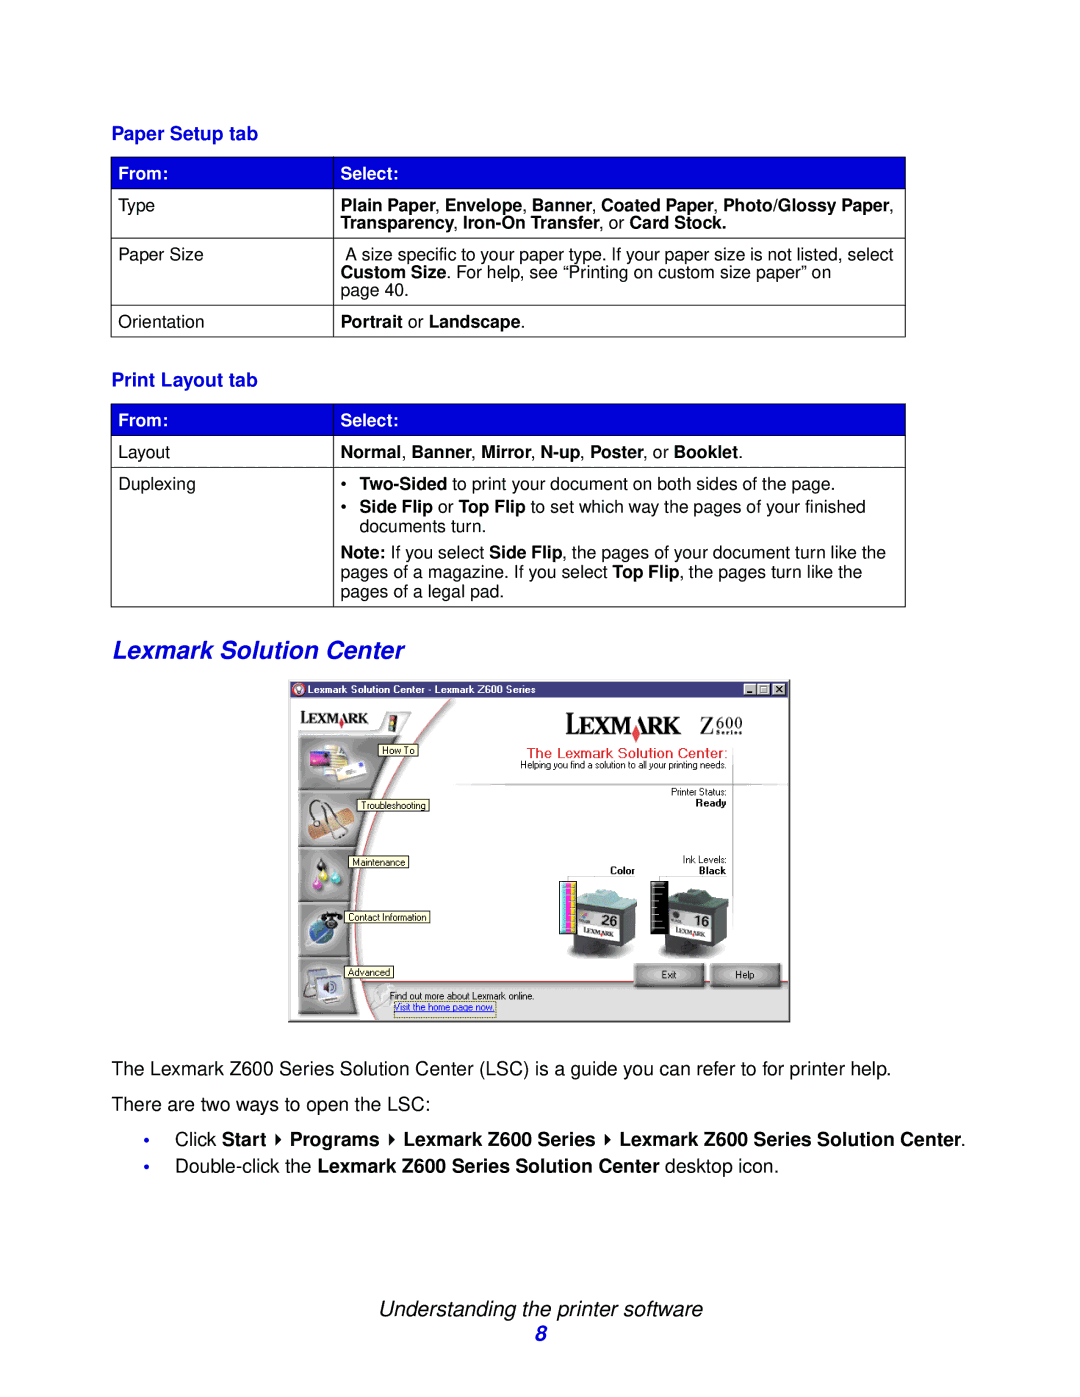 Lexmark Z600 manual Lexmark Solution Center, Paper Setup tab 